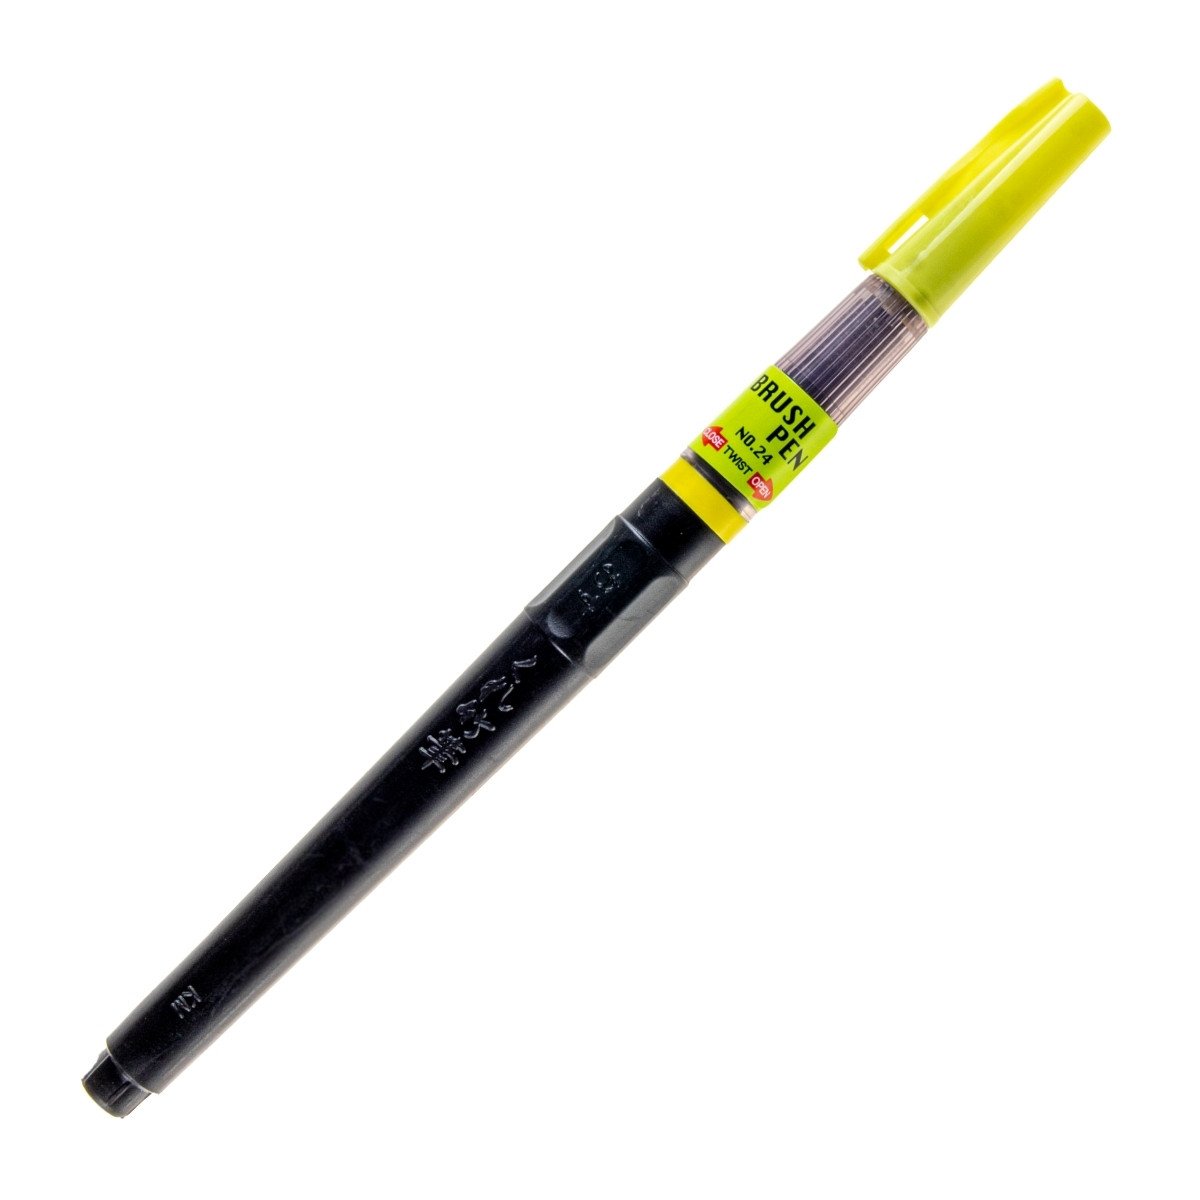 Zig Mangaka Brush Pen No 24 Siyah